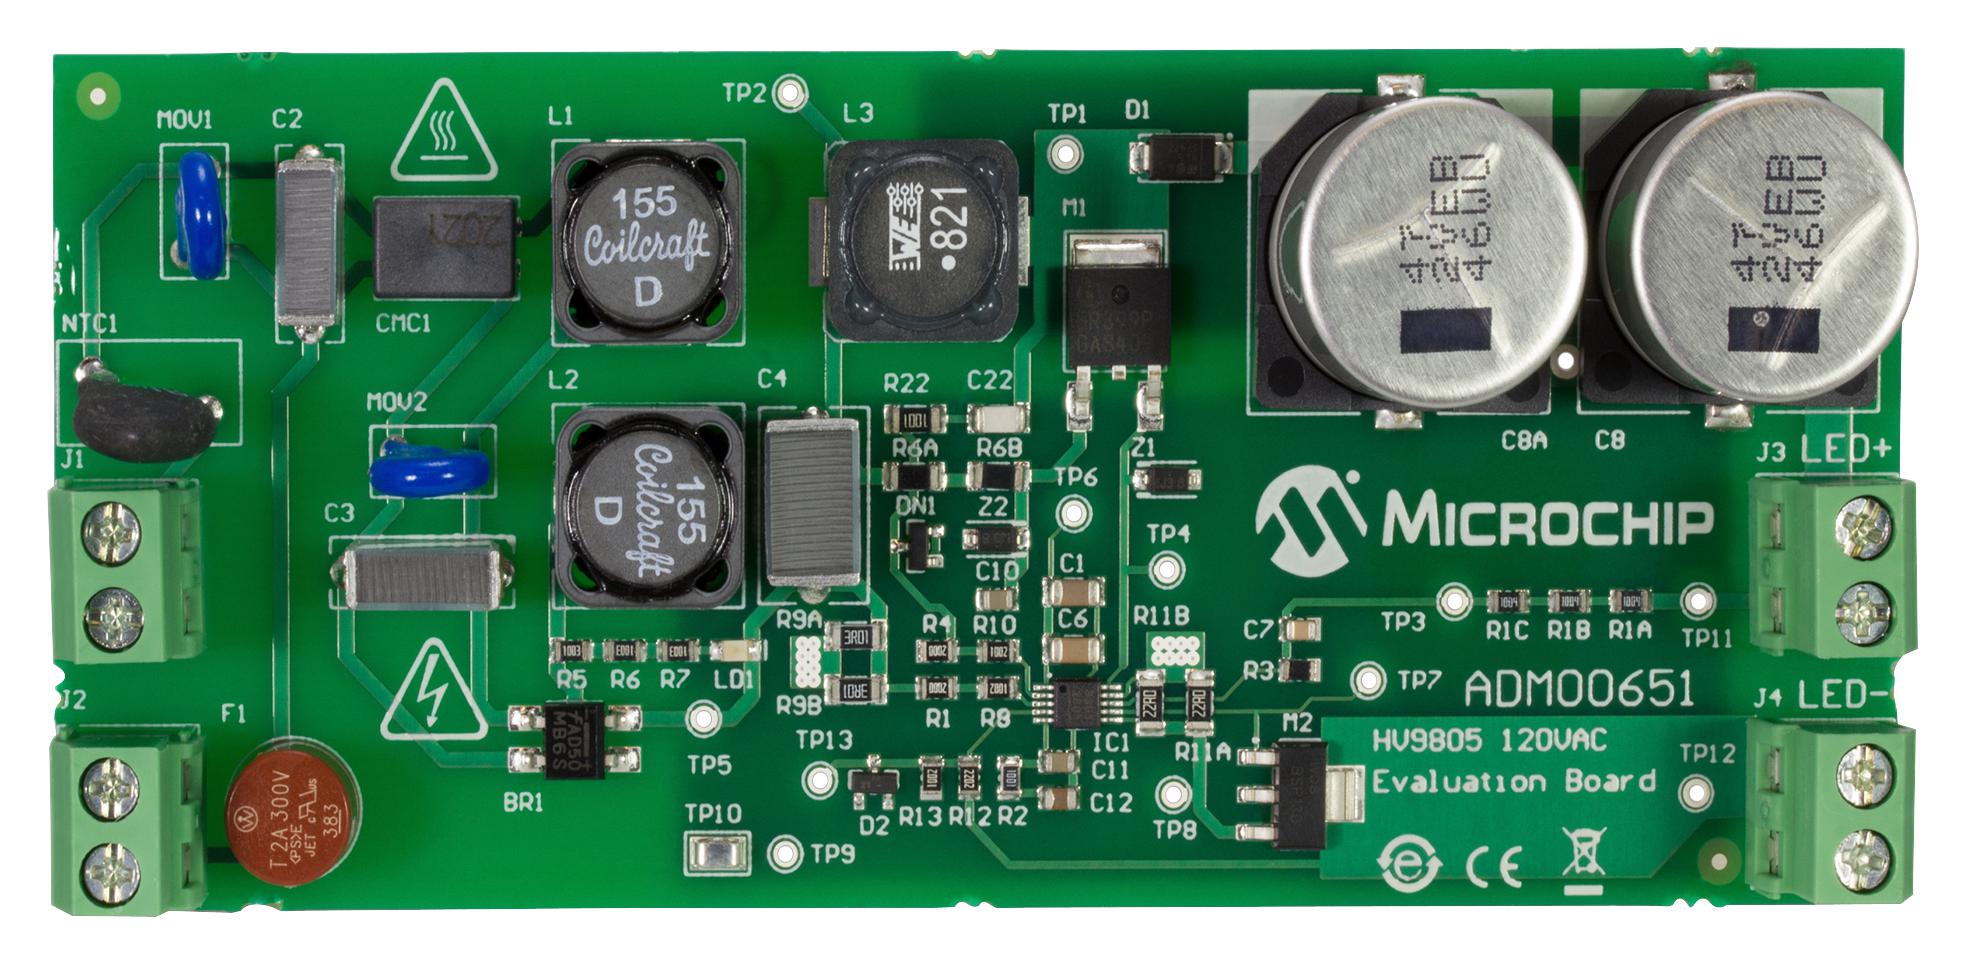 ADM00651 EVAL BOARD, HV9805 OFF-LINE LED DRIVER MICROCHIP